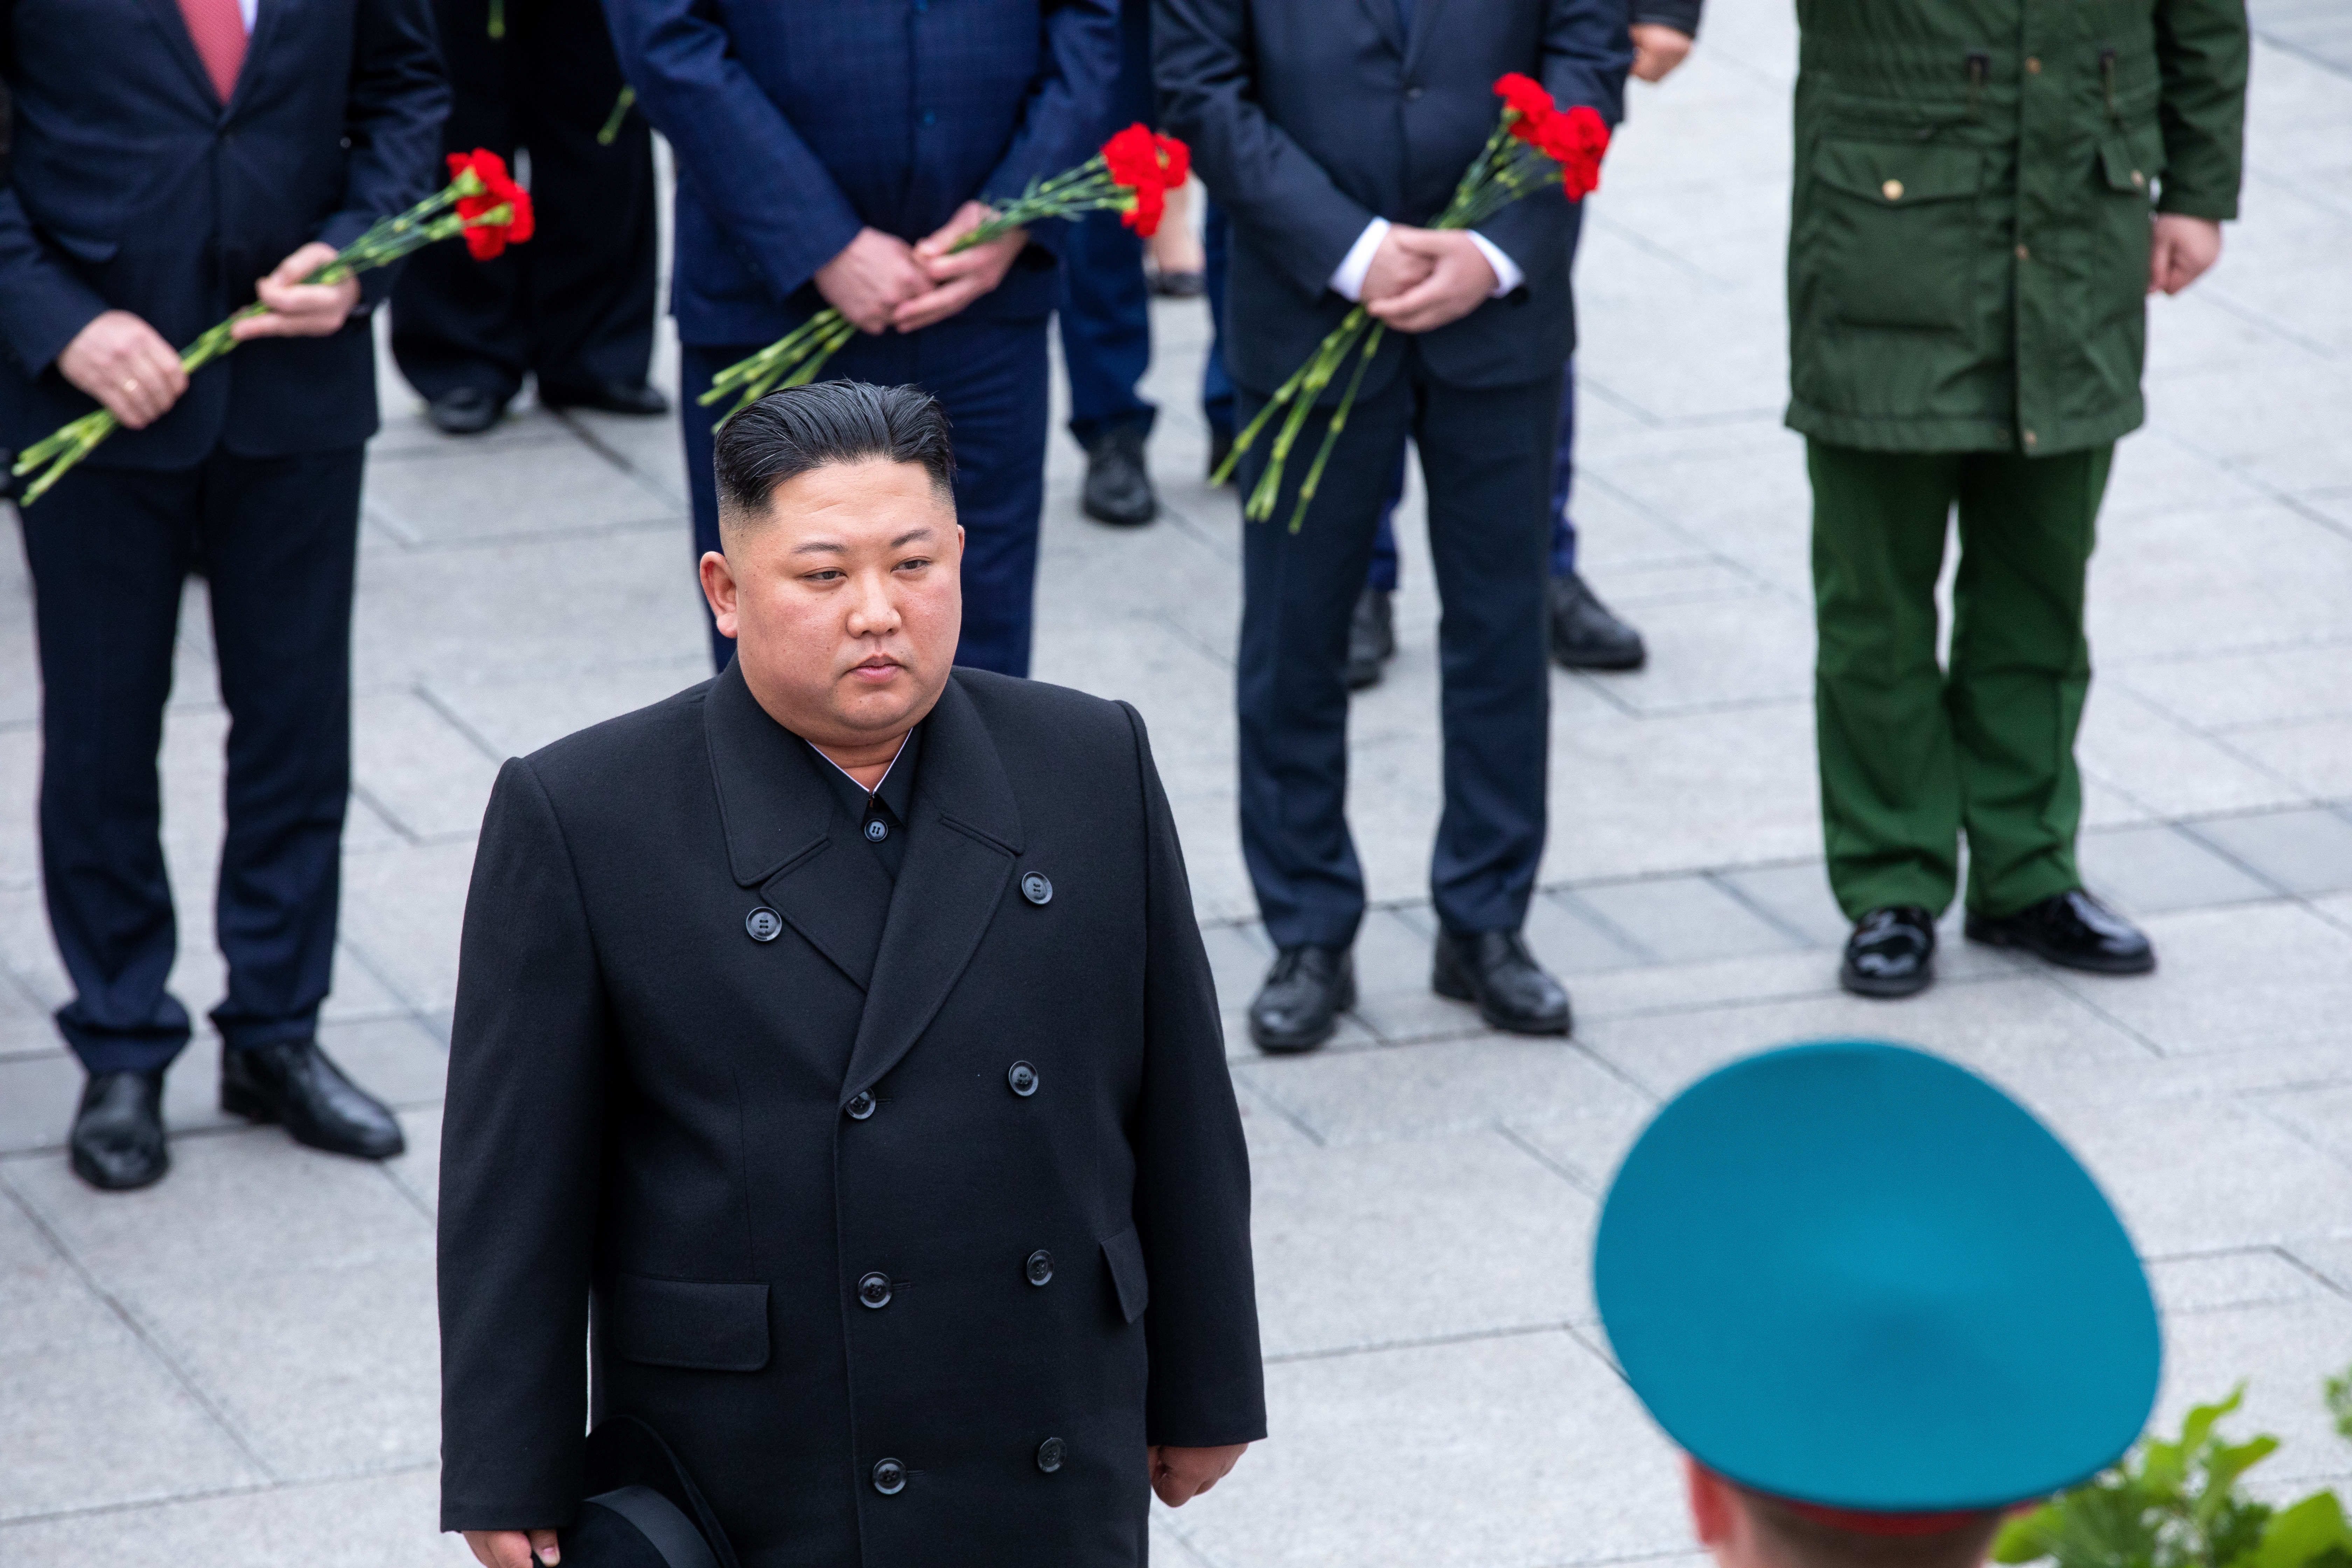 Kim Jong Un Fires Missiles In Direction Of Kamala Harris' Flight As She Slams North Korea's 'Brutal Dictatorship'